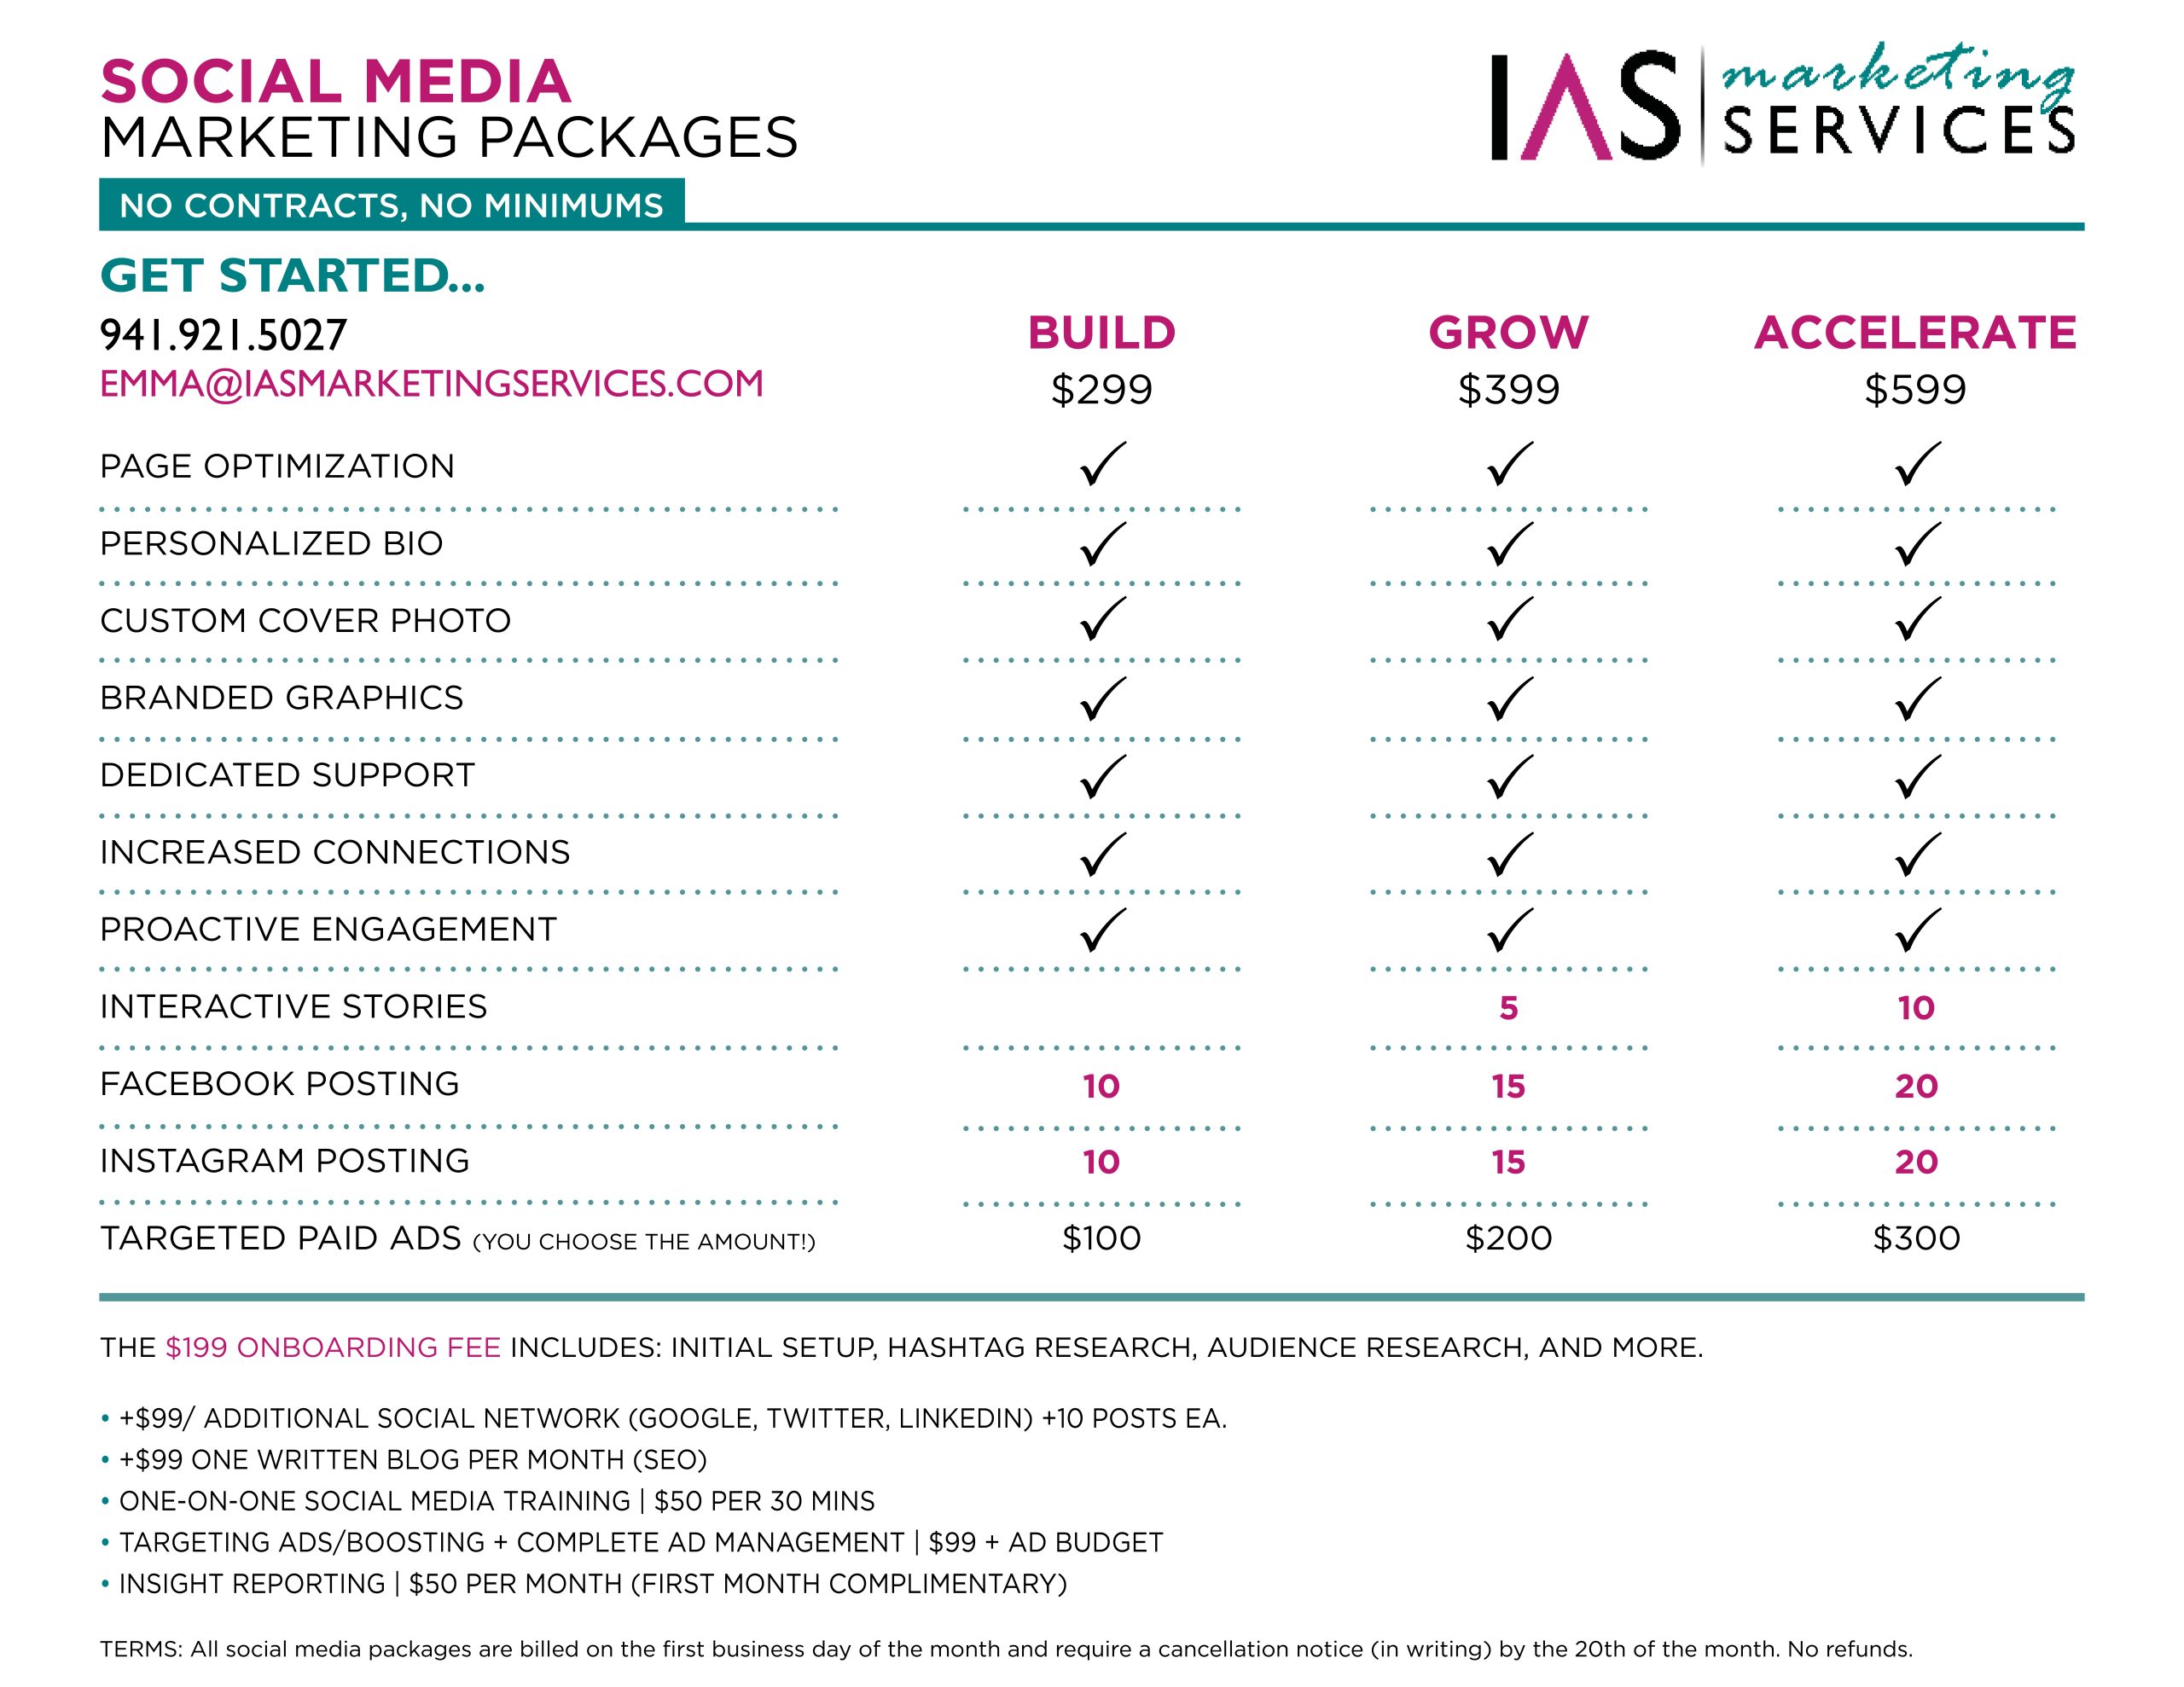 IAS Marketing Services Social Media Menu